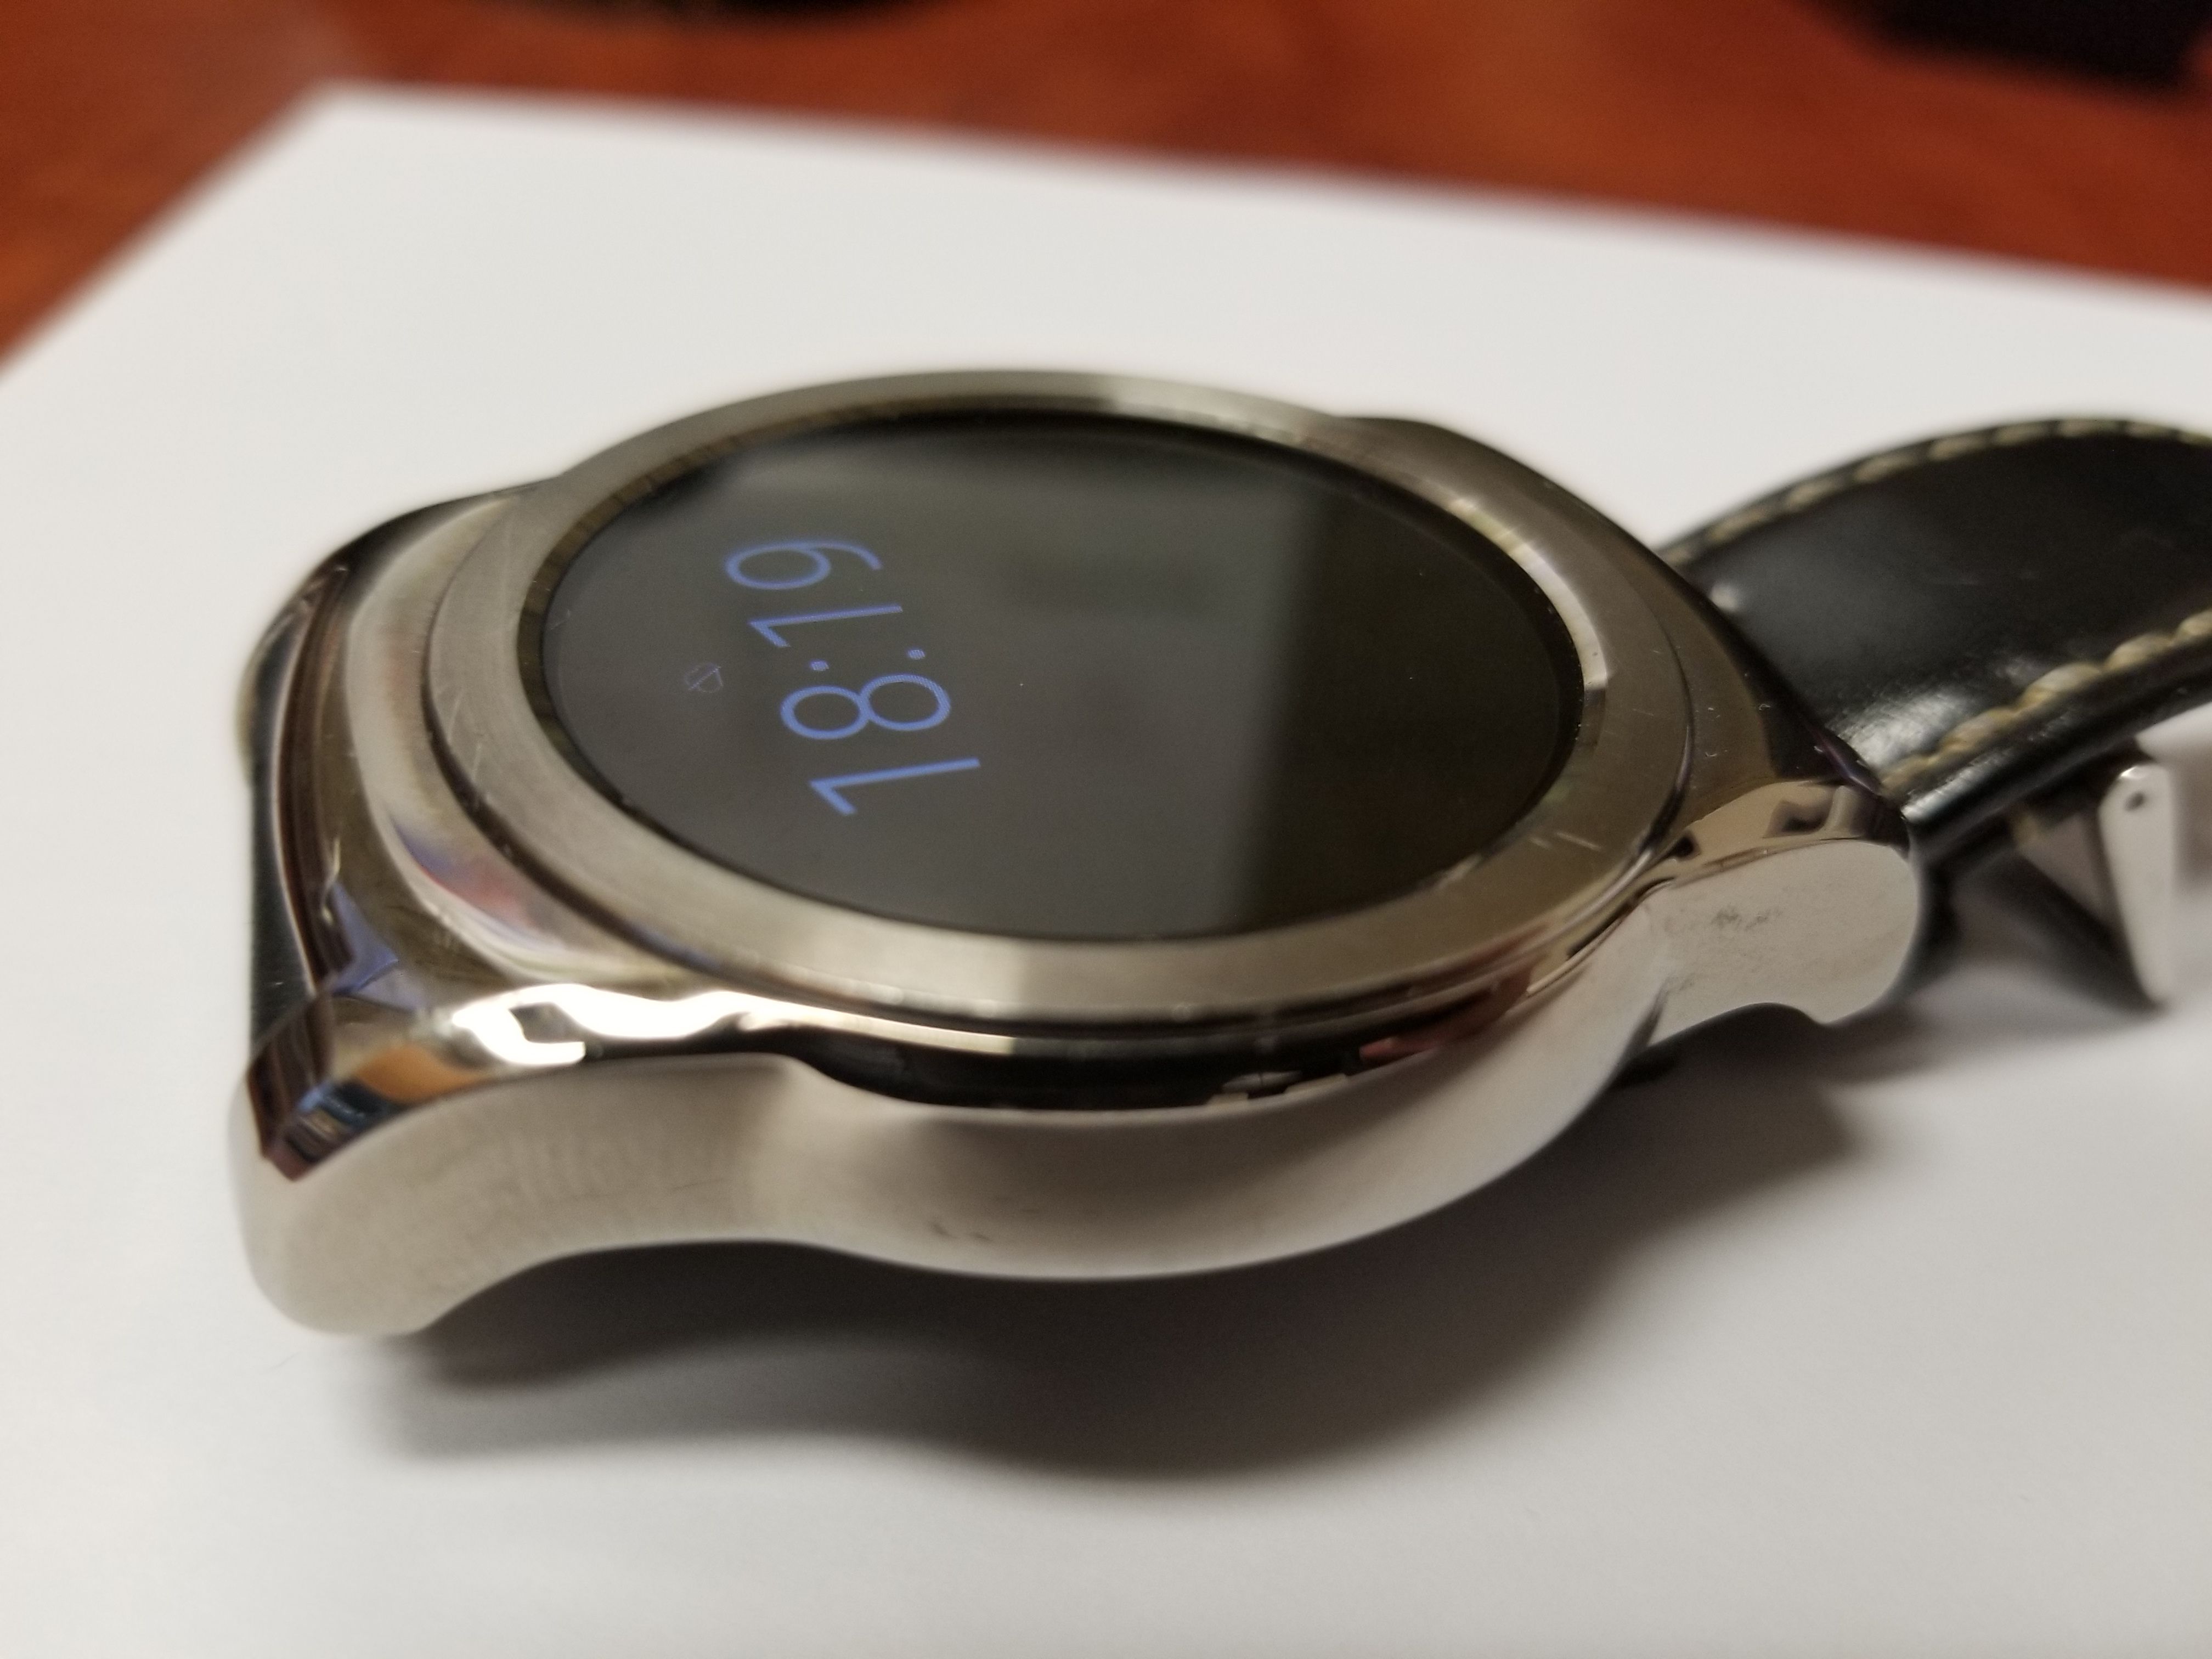 LG Urbane smart watch heart rate monitor similar to samsung galaxy and apple watch smartwatch fitbit garmin